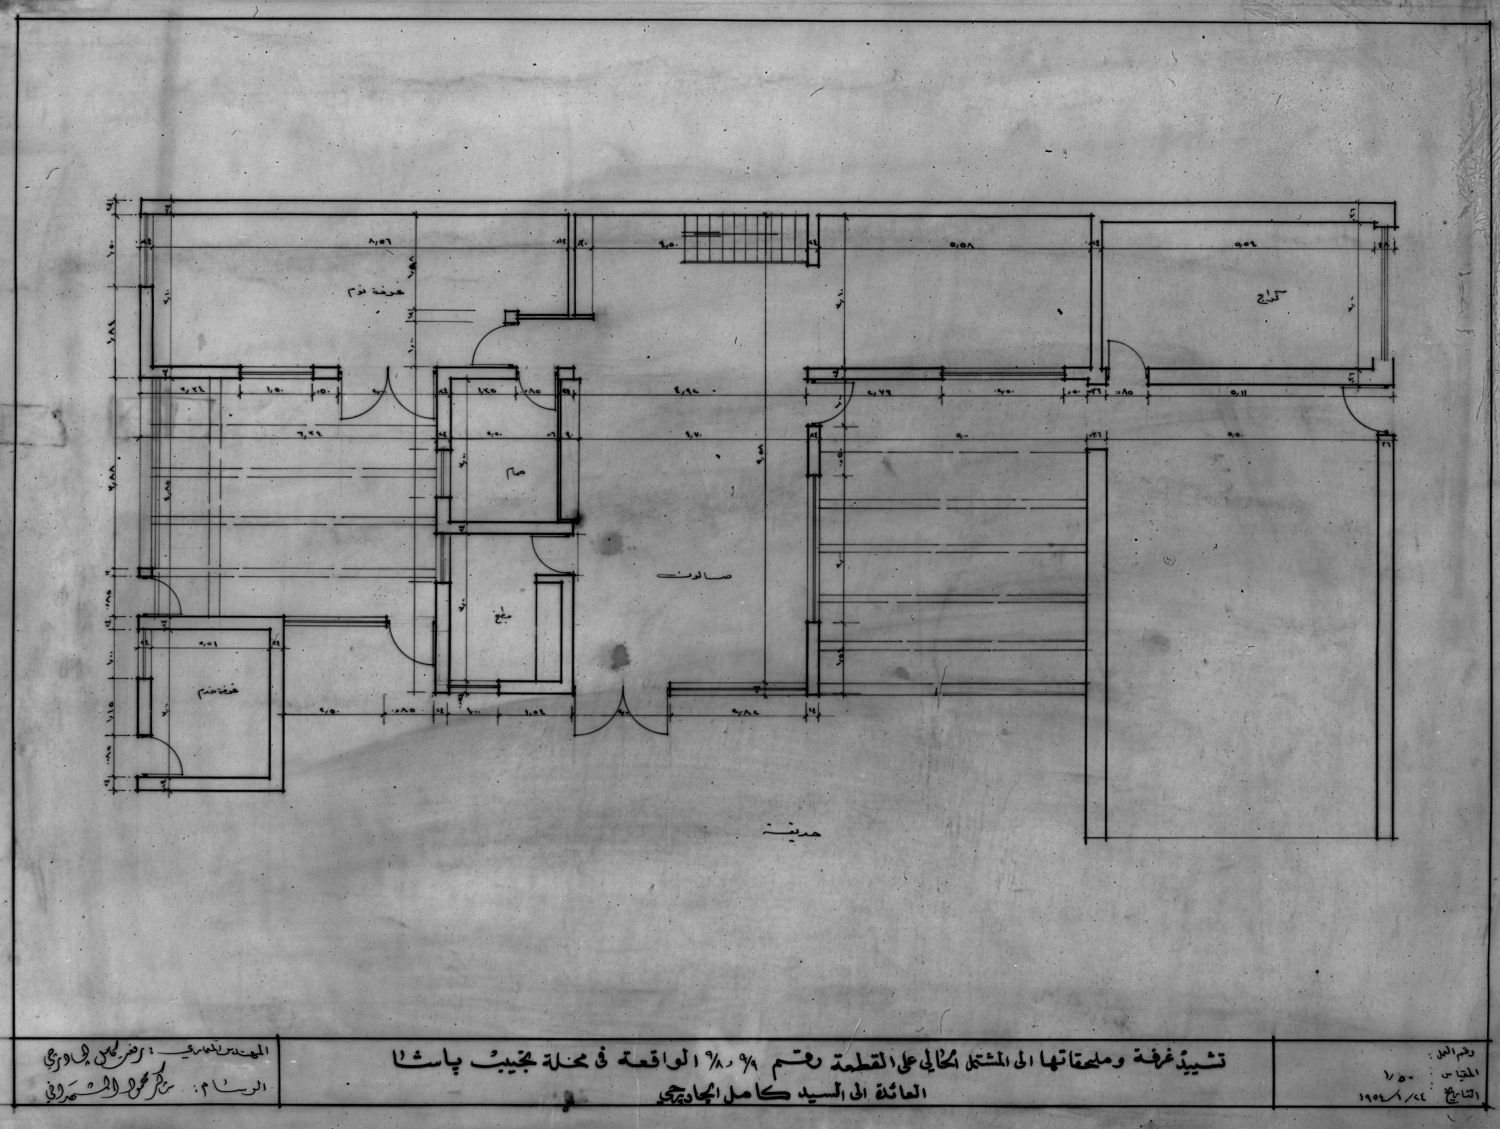 Version of floor plan for Rifat Chadirji House.